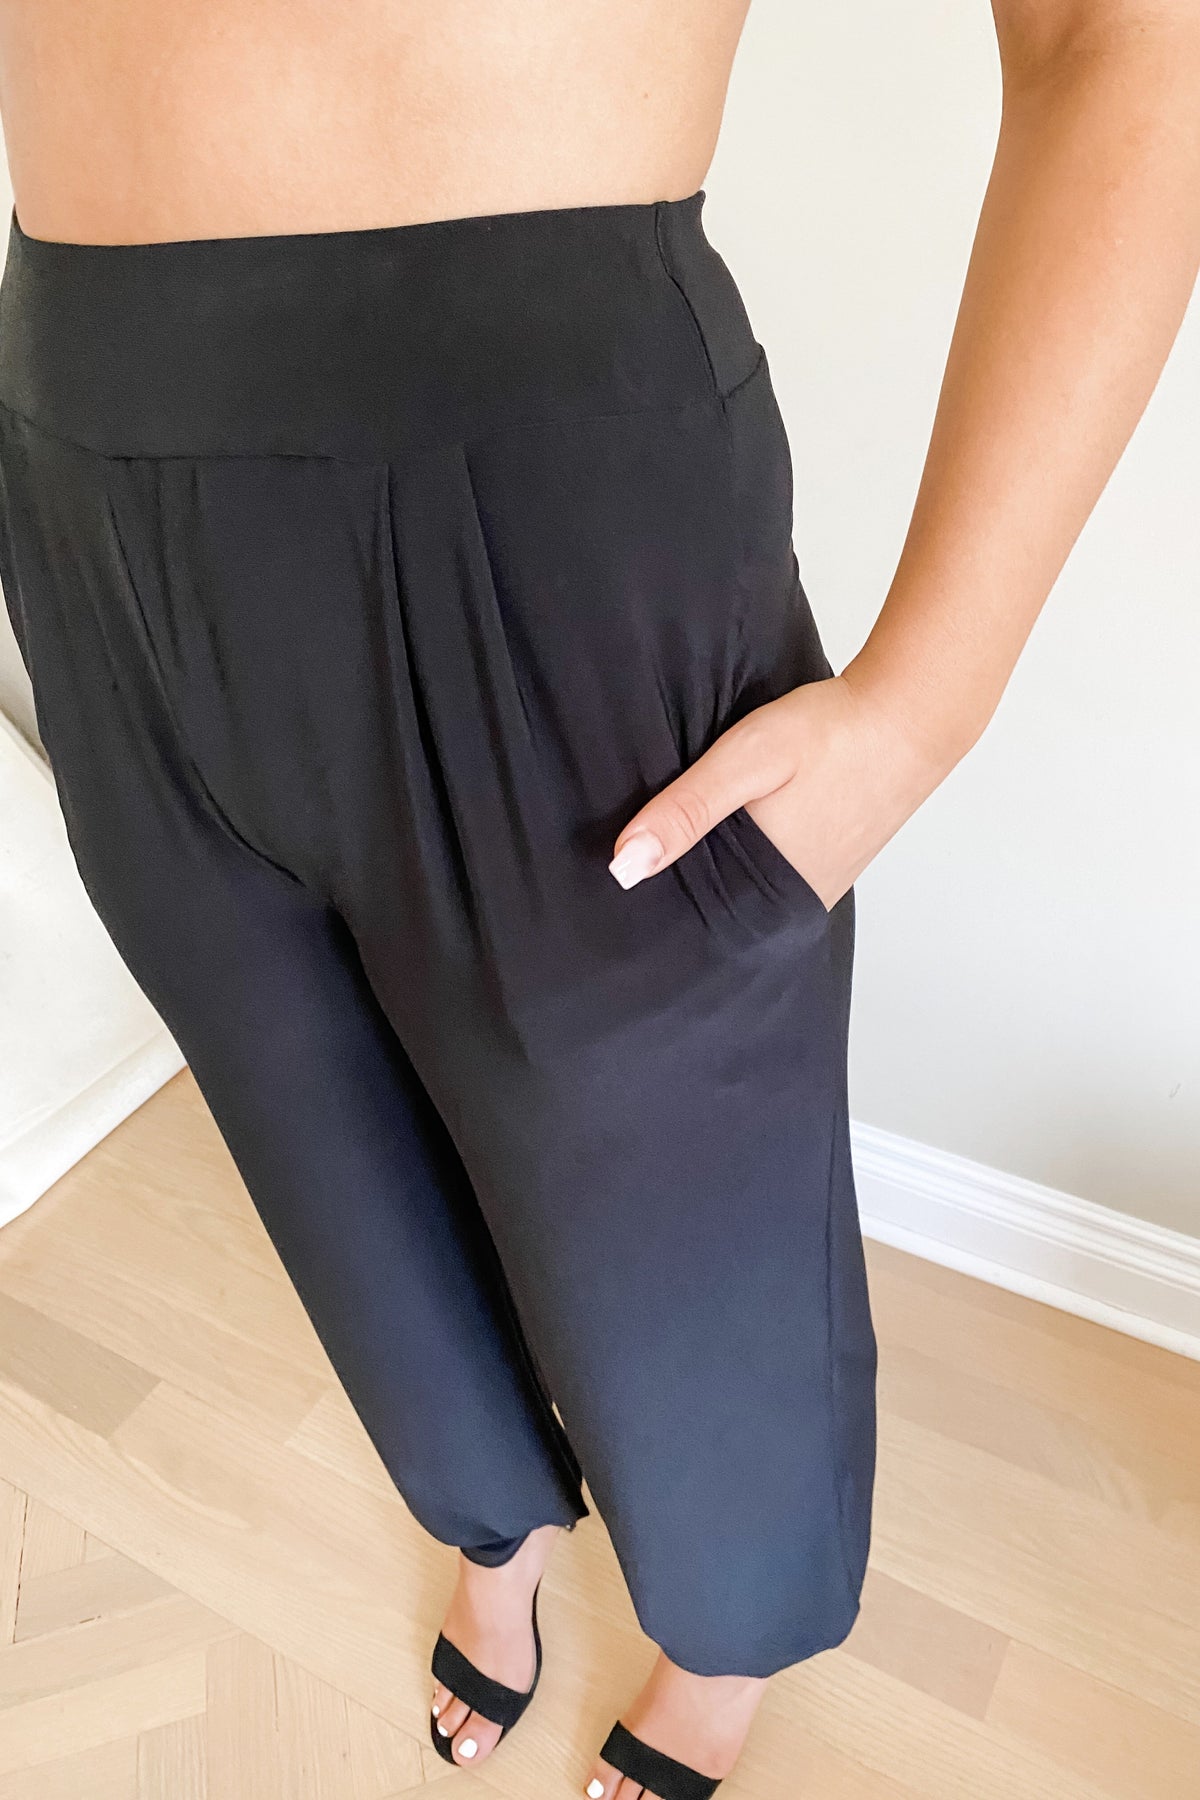 Pocket Pants : Wide-leg to Dressy Joggers side view pocket